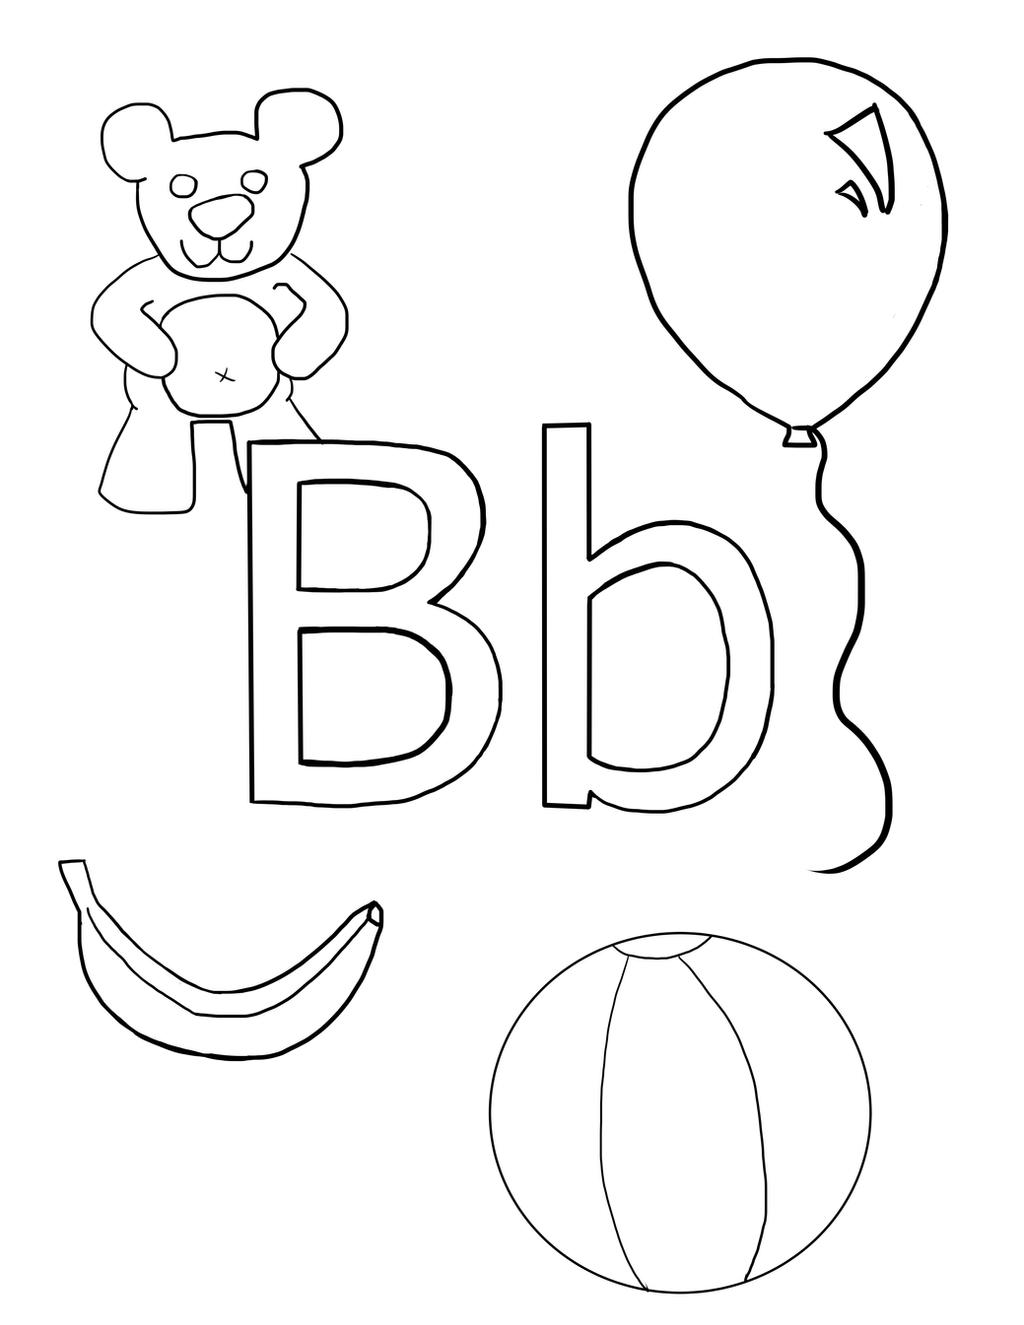 letter-b-coloring-sheet-by-audiobot11-on-deviantart